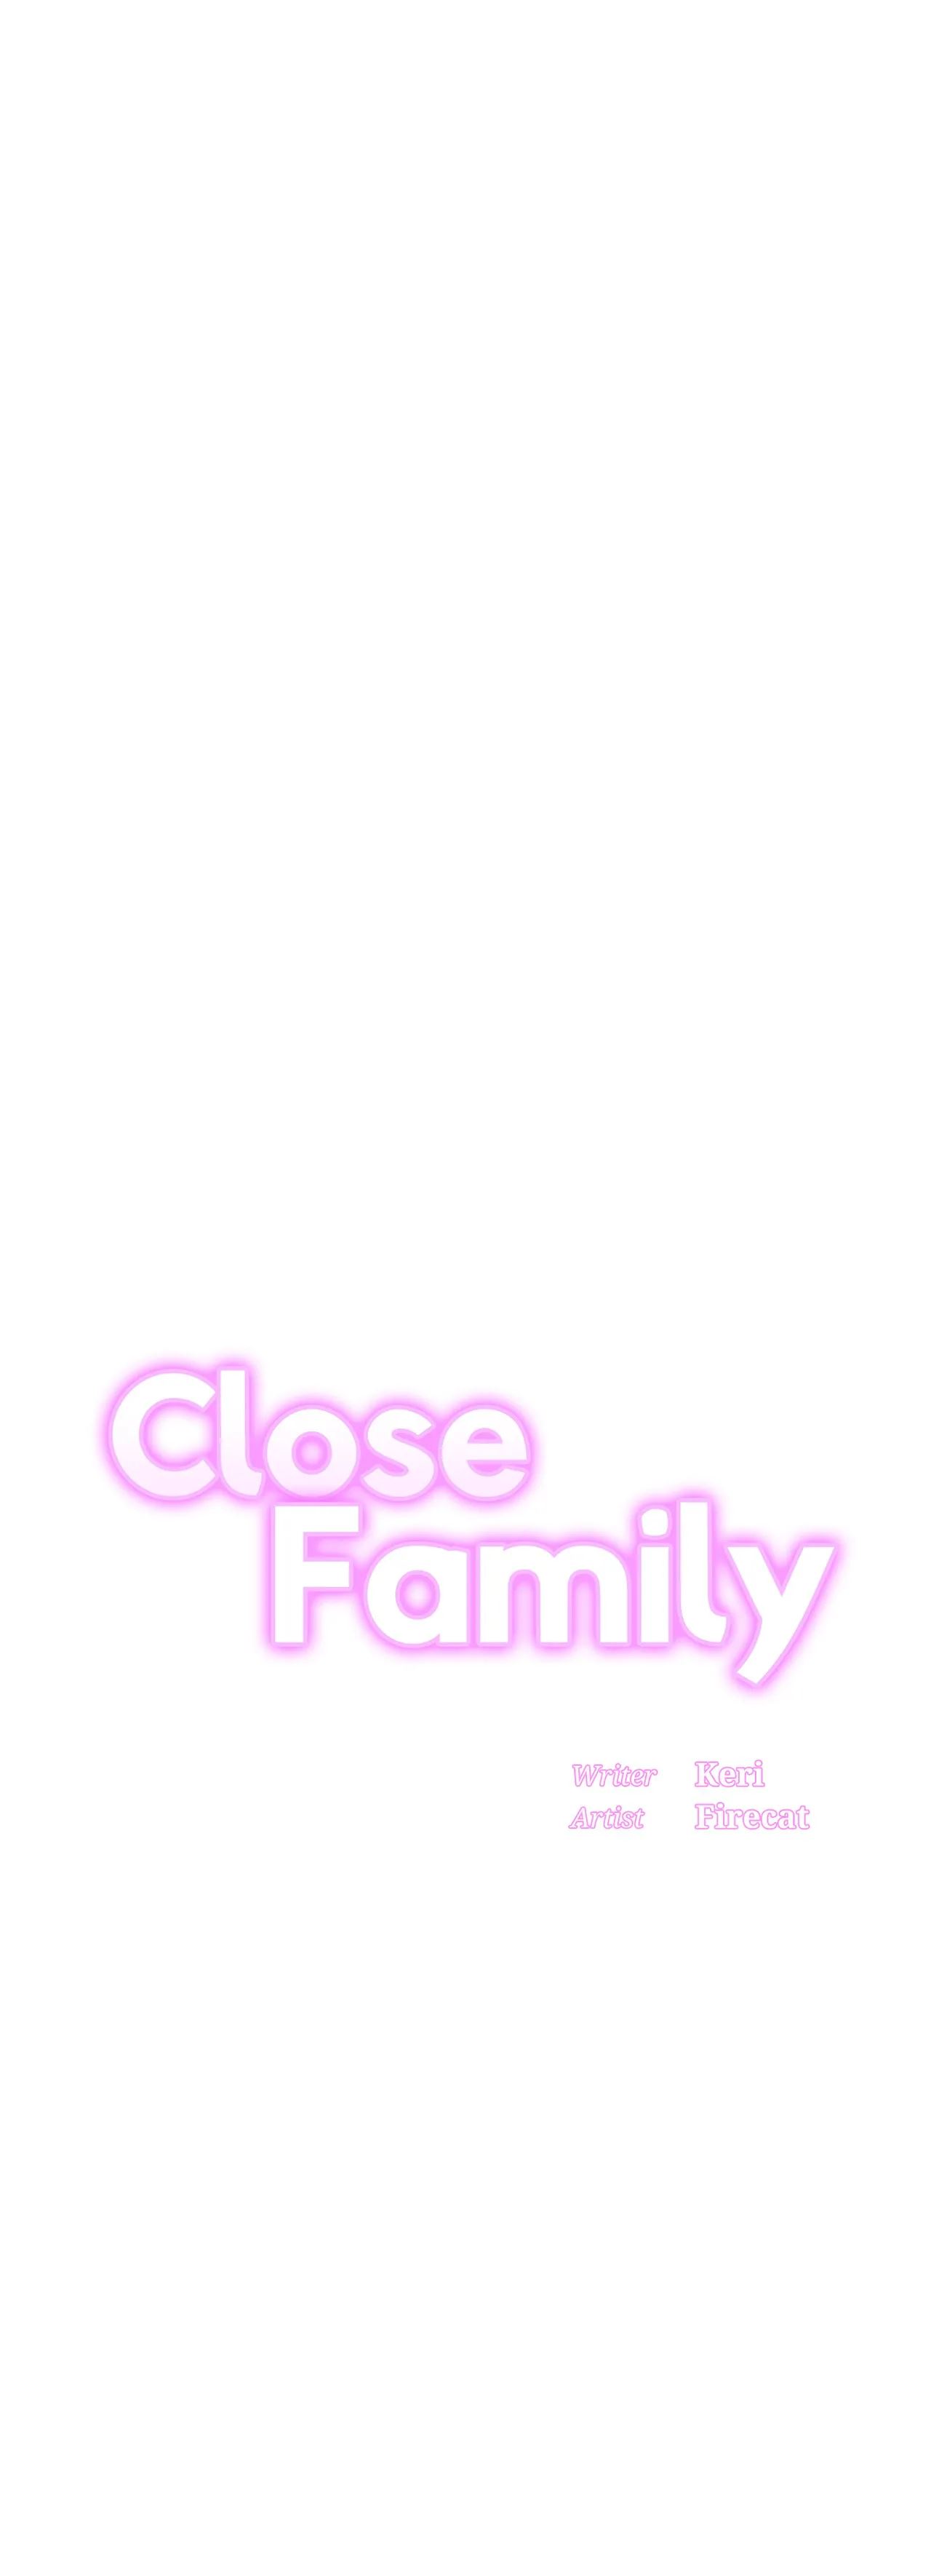 Close Family image